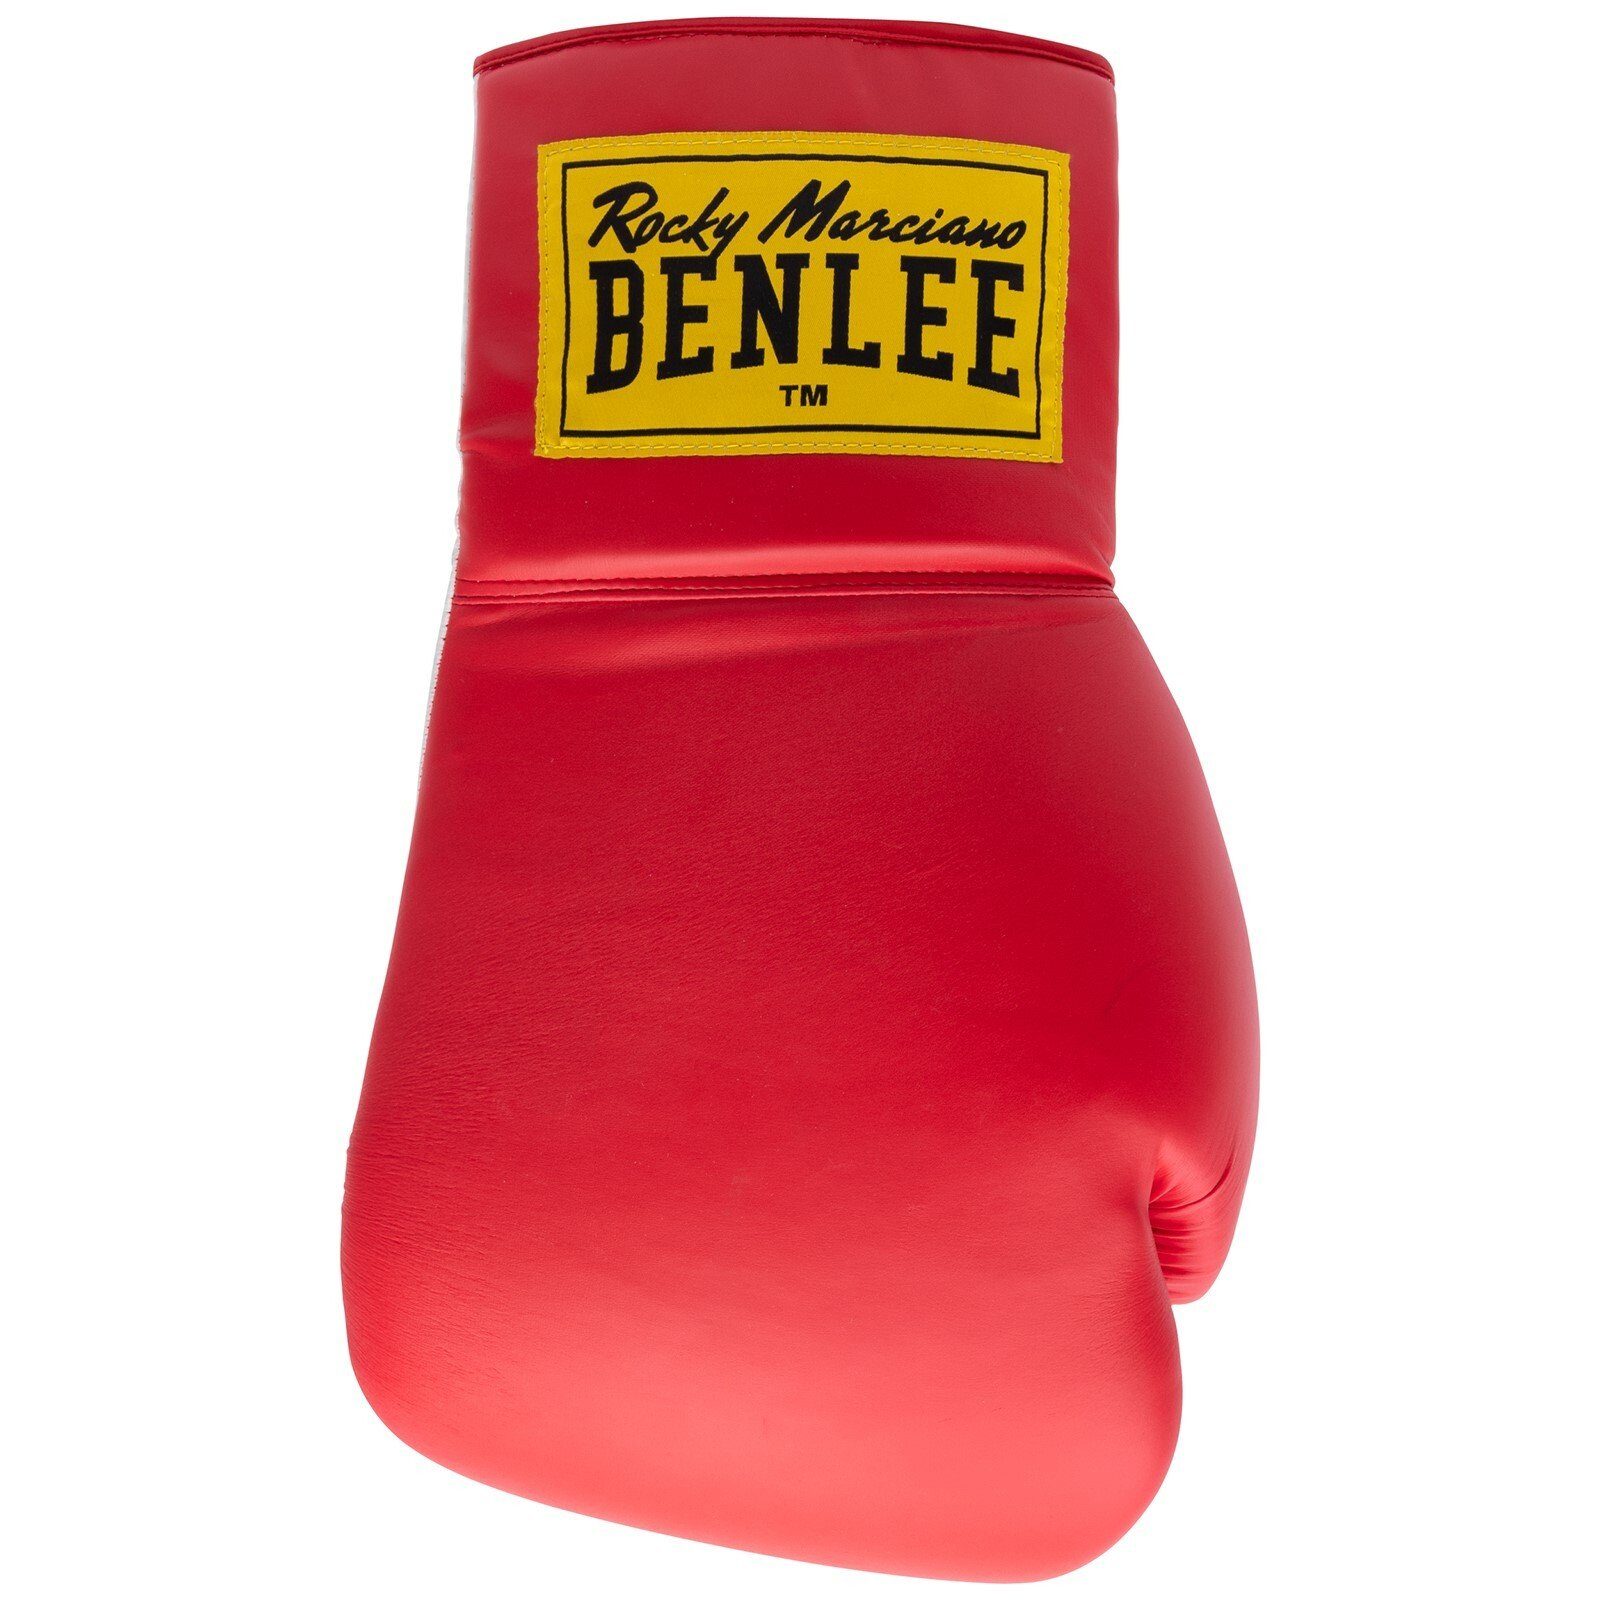 Benlee Rocky Marciano Boxhandschuhe GIANT BENLEE Red